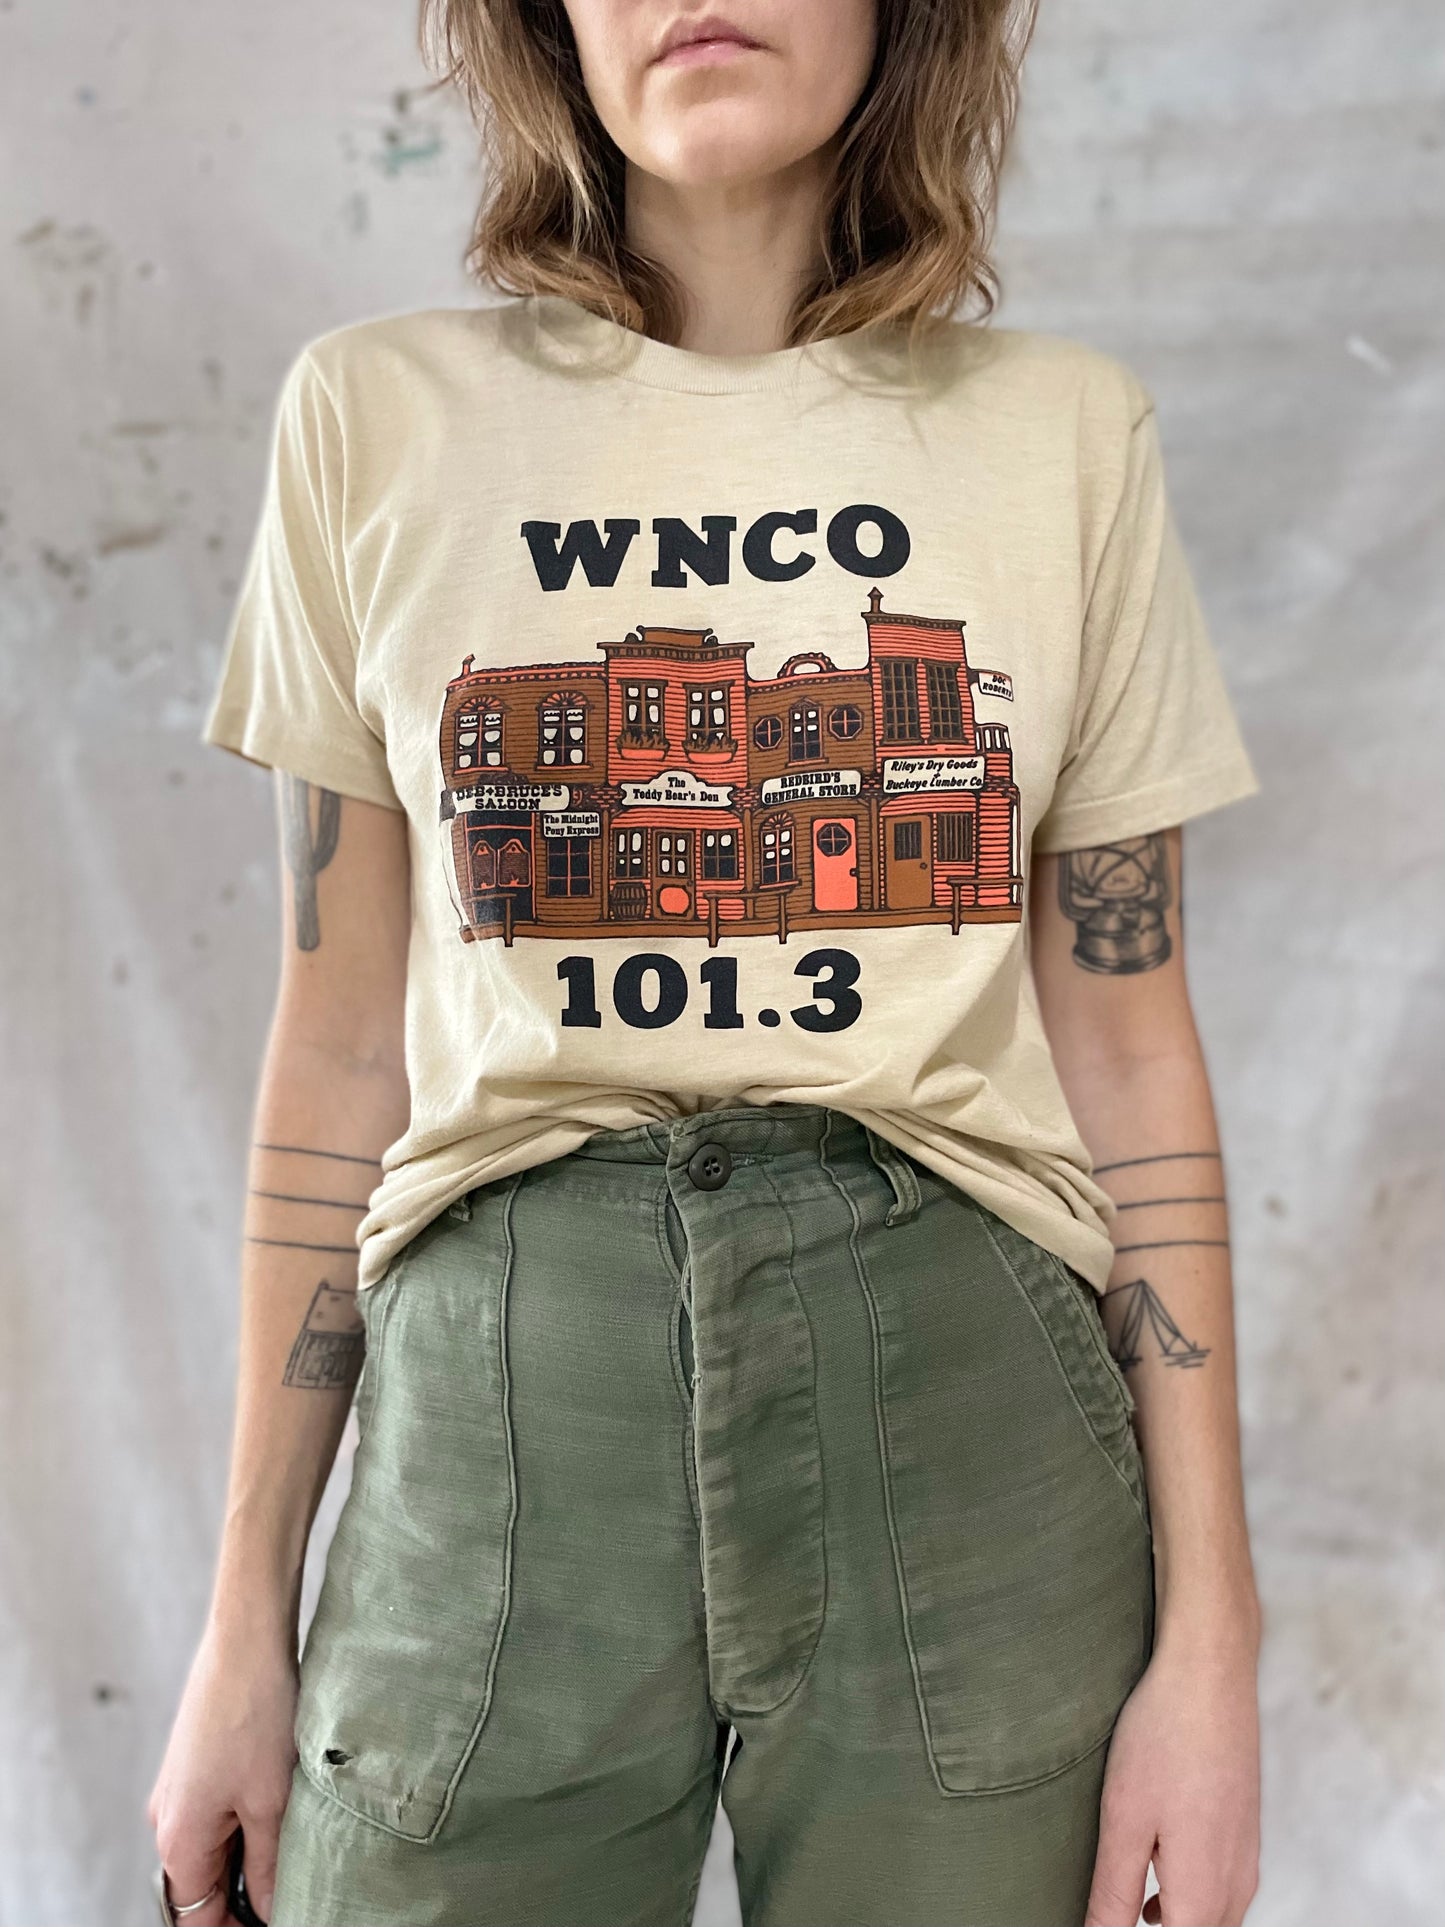 WNCO 101.3 Mid-Ohio country radio station